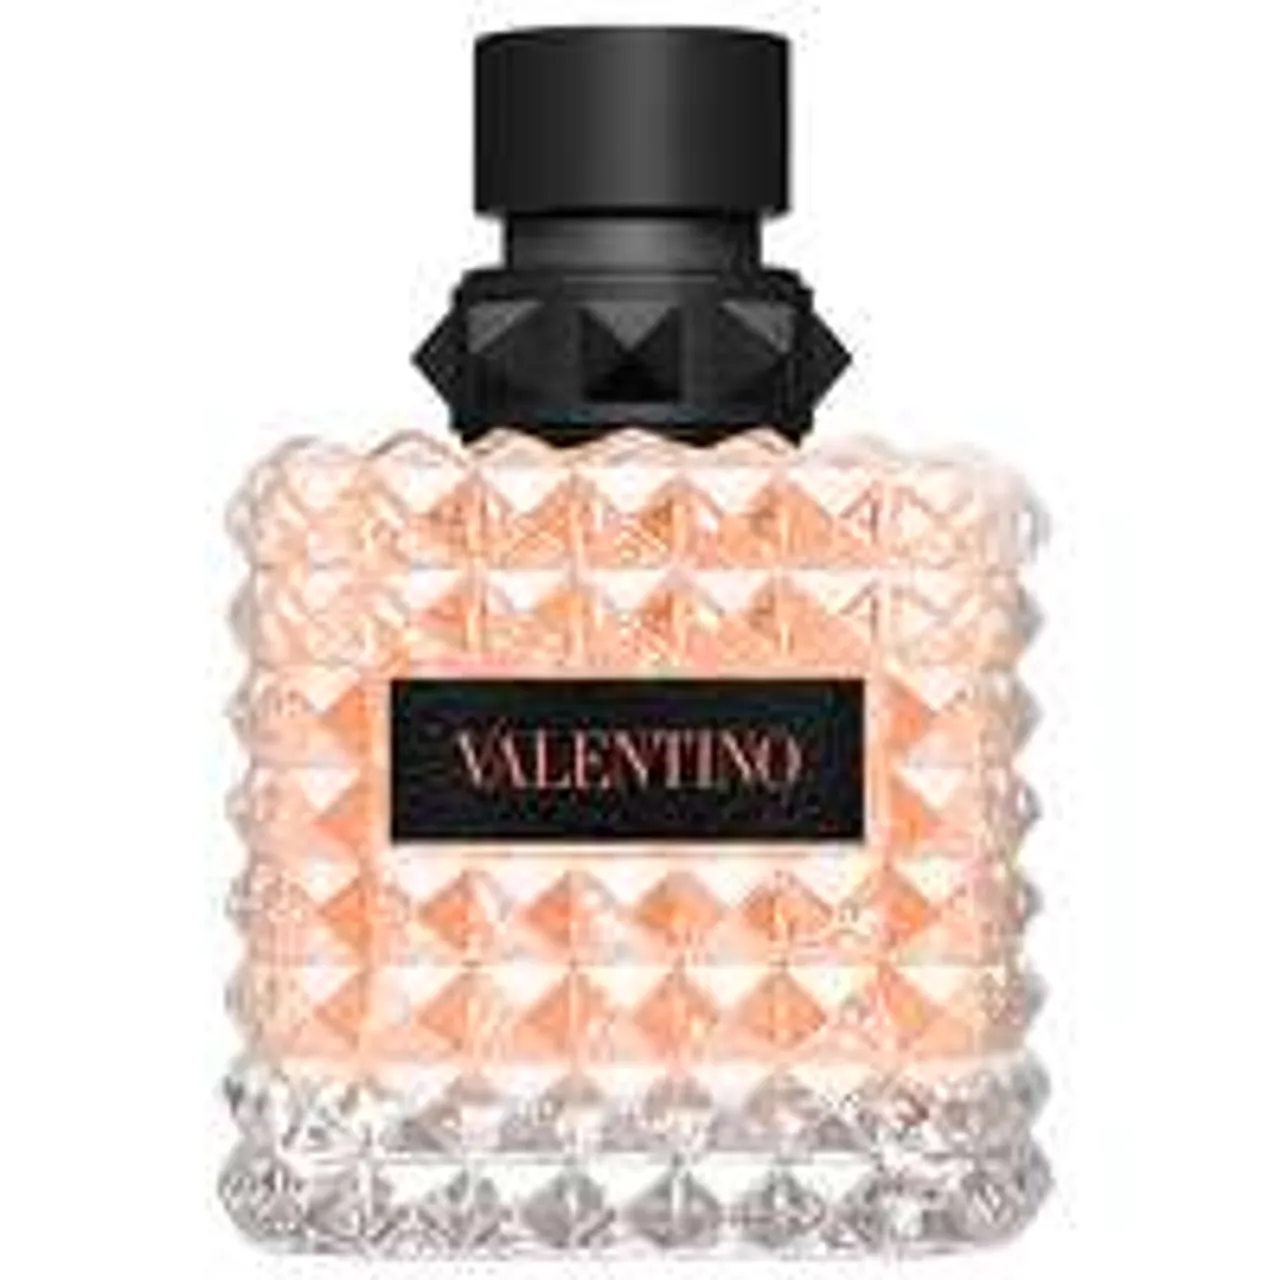 Valentino Donna Born In Roma Coral Fantasy Eau de Parfum Spray 100ml